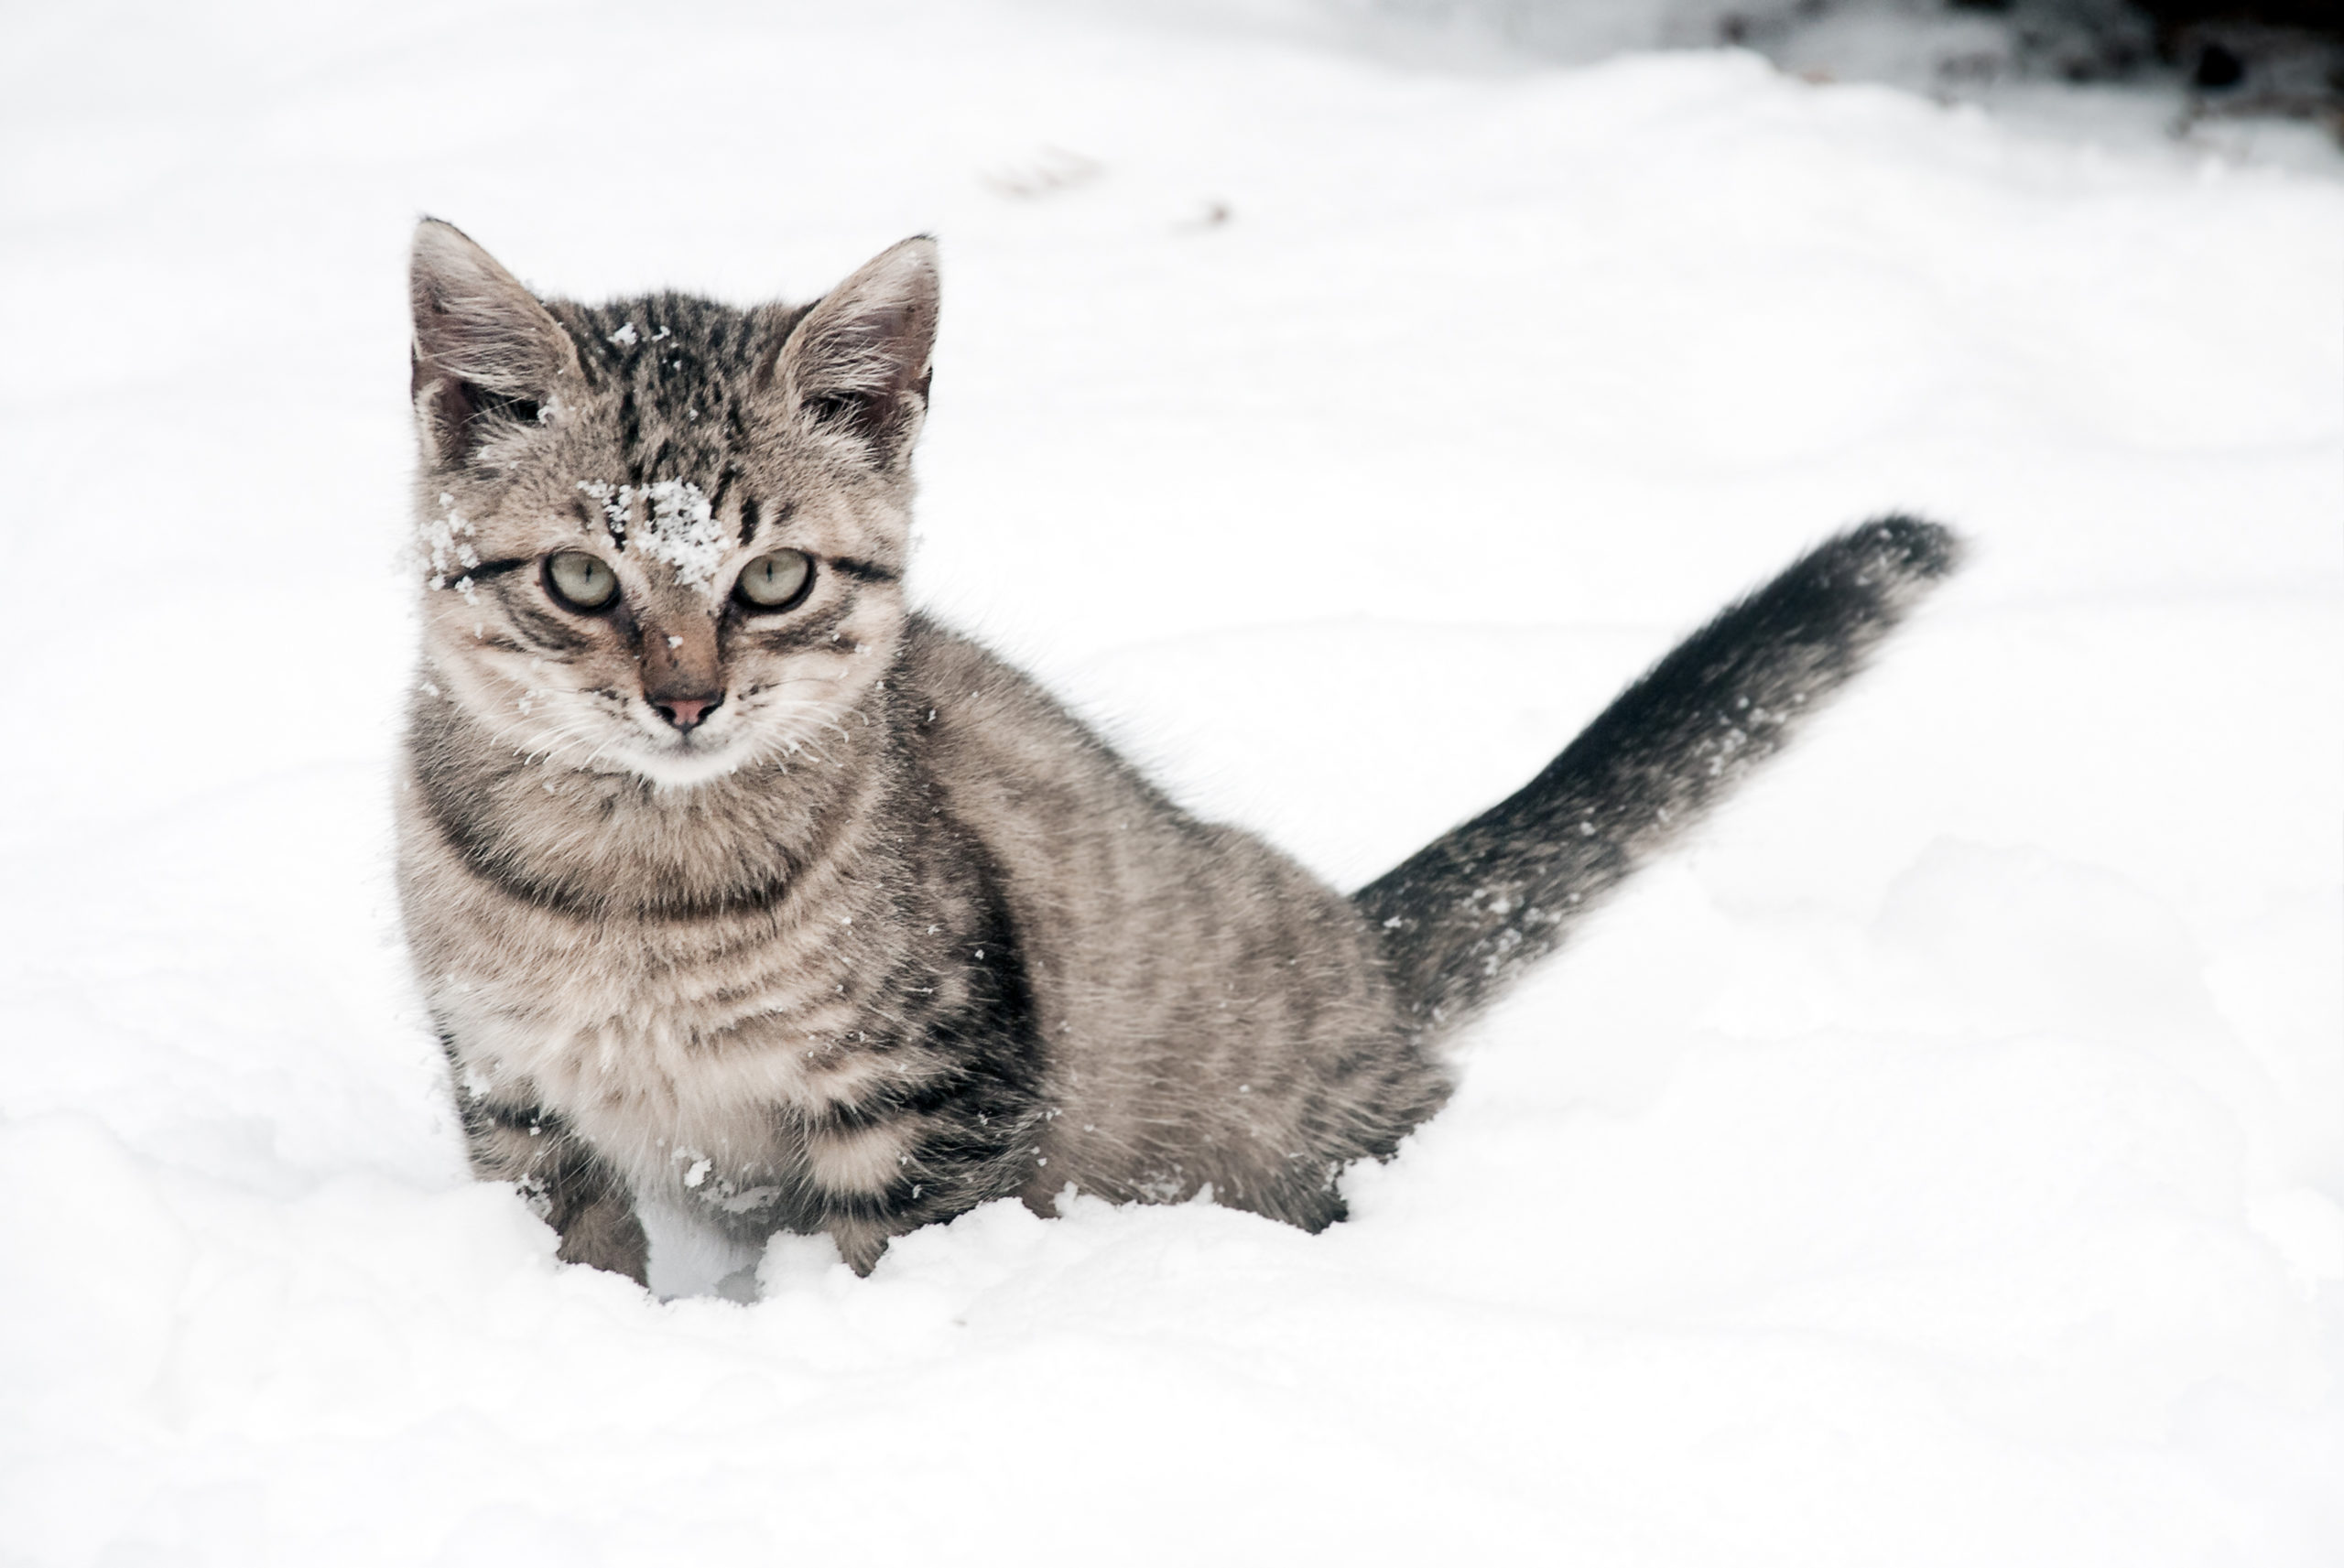 Tabby cat in snow